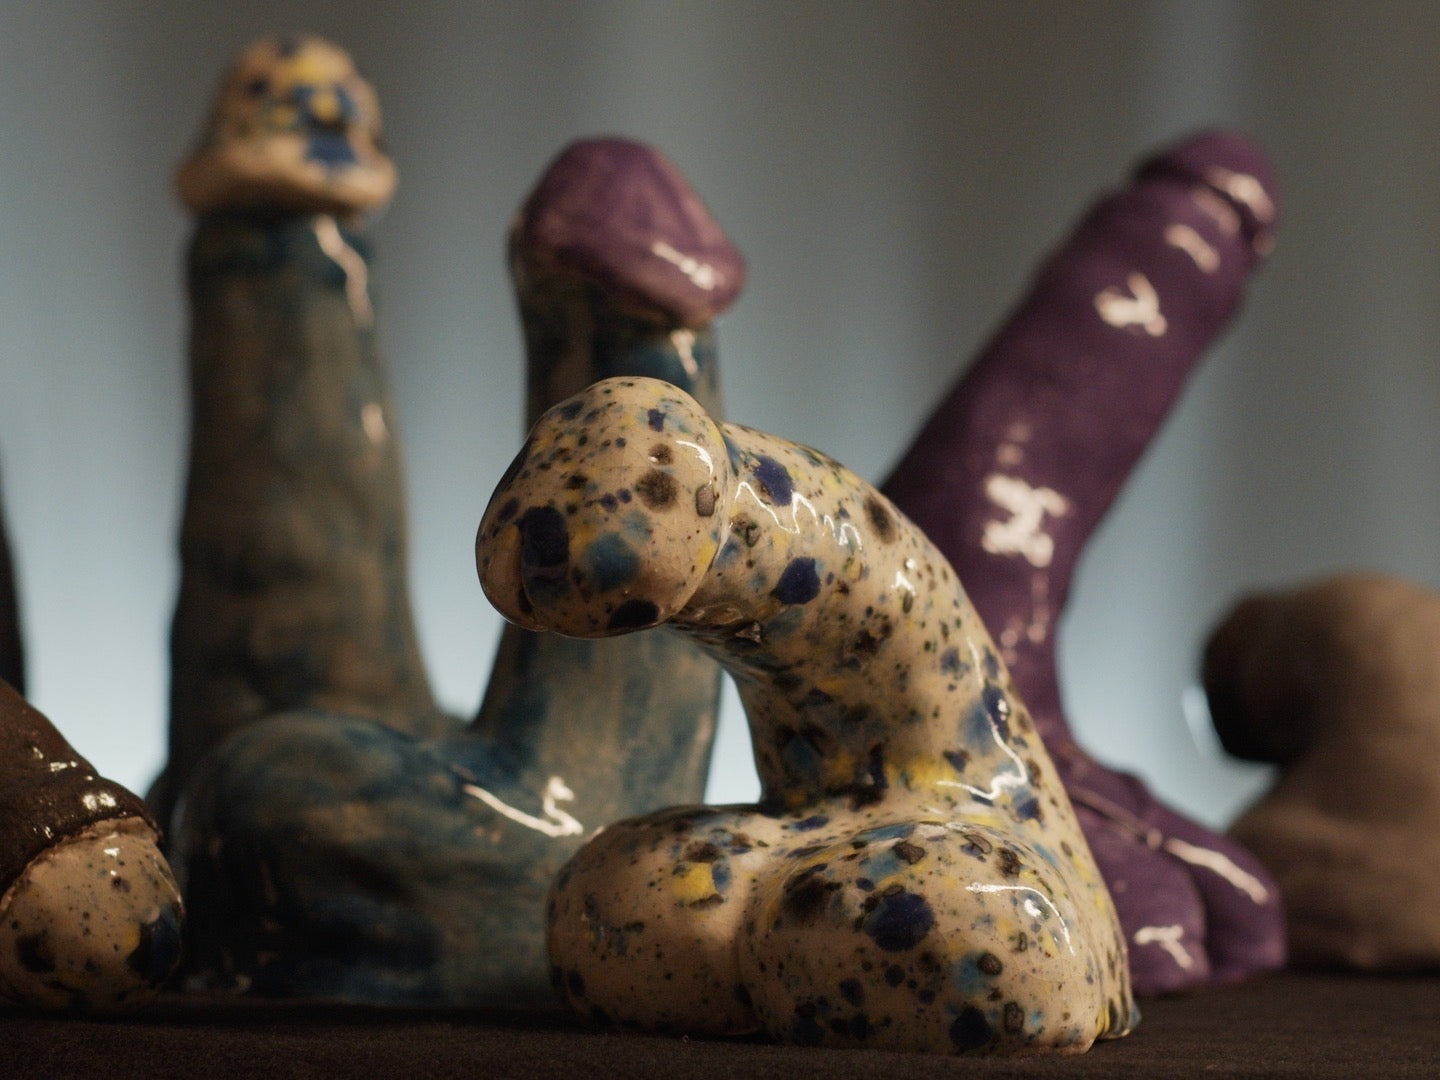 Ceramic Dick Sculpture Workshop - in Berlin, Germany